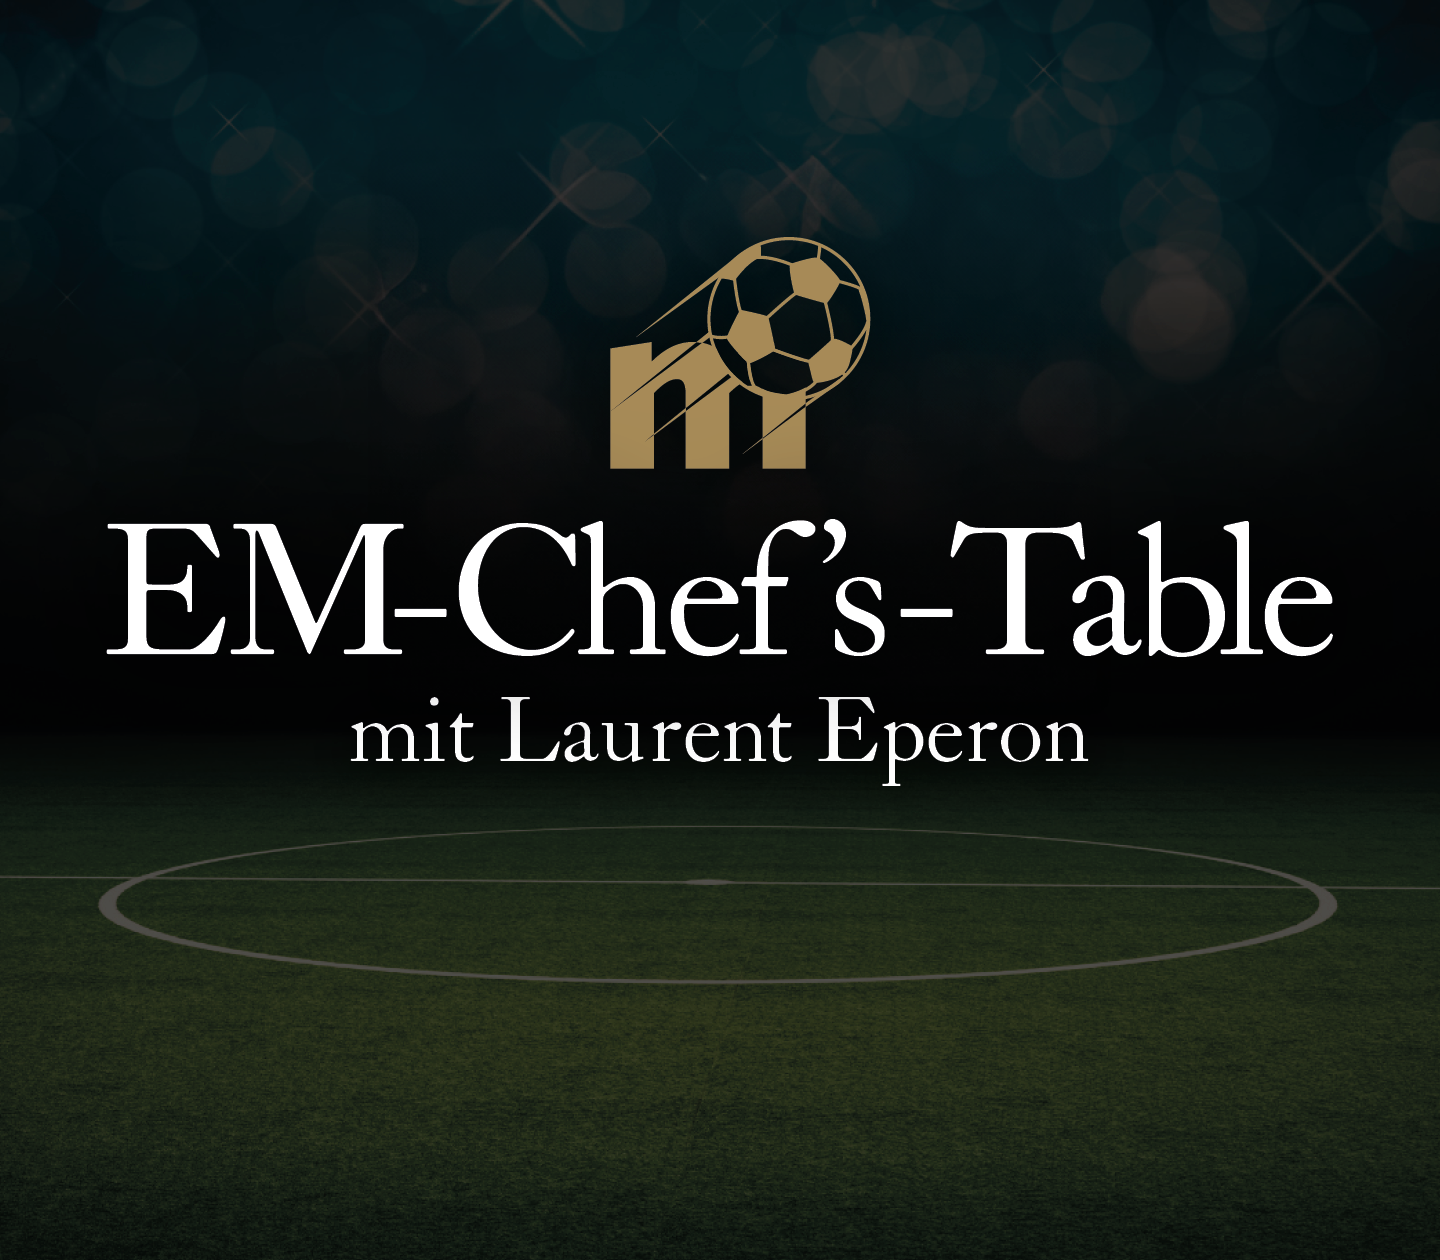 EM-Chef's-Table   SCHWEIZ vs DEUTSCHLAND